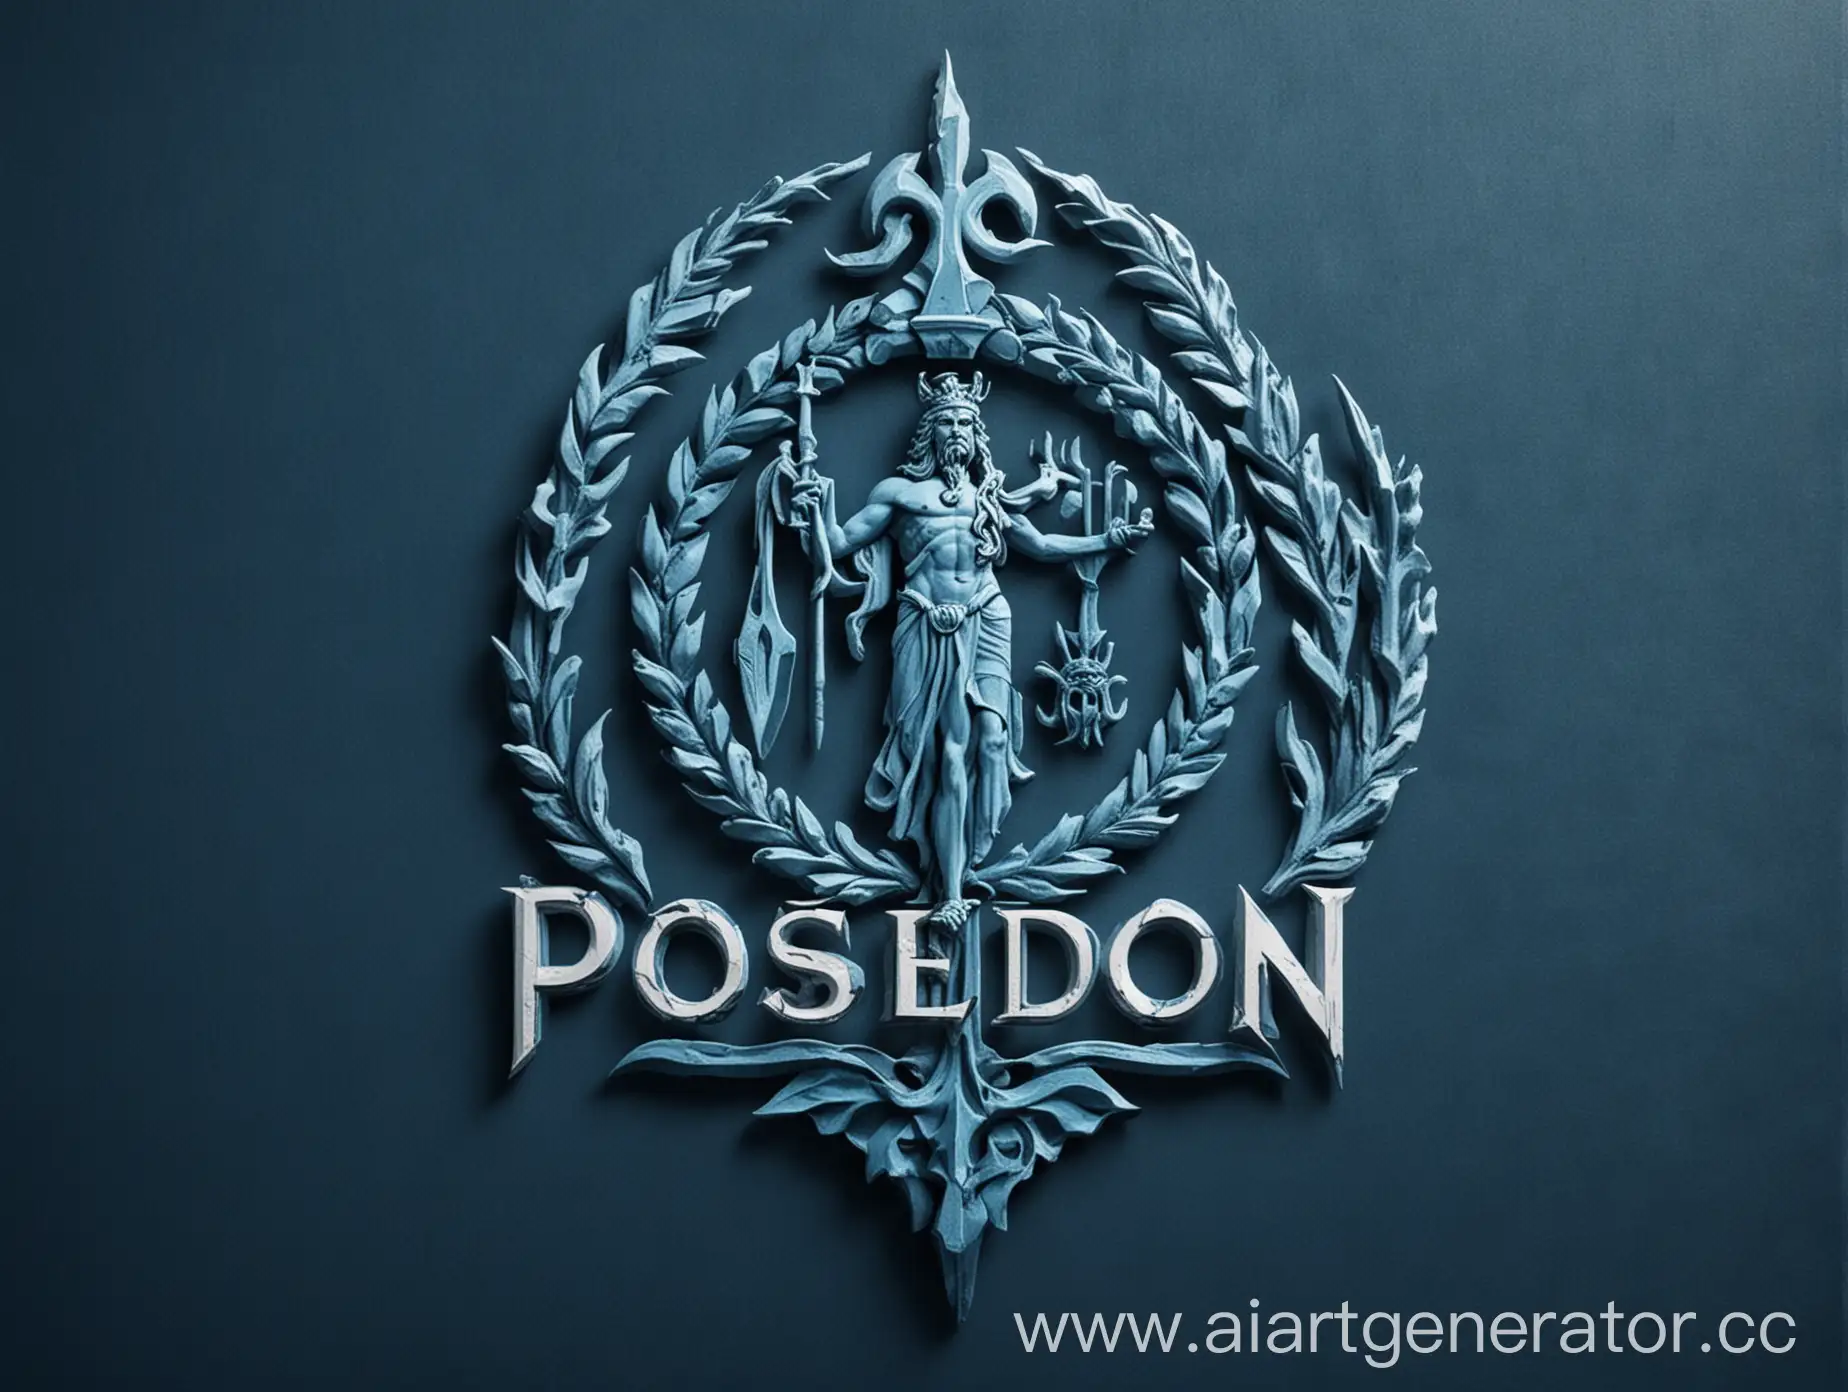 Poseidon-Hotel-Logo-Trident-Emblem-in-Oceanic-Blue